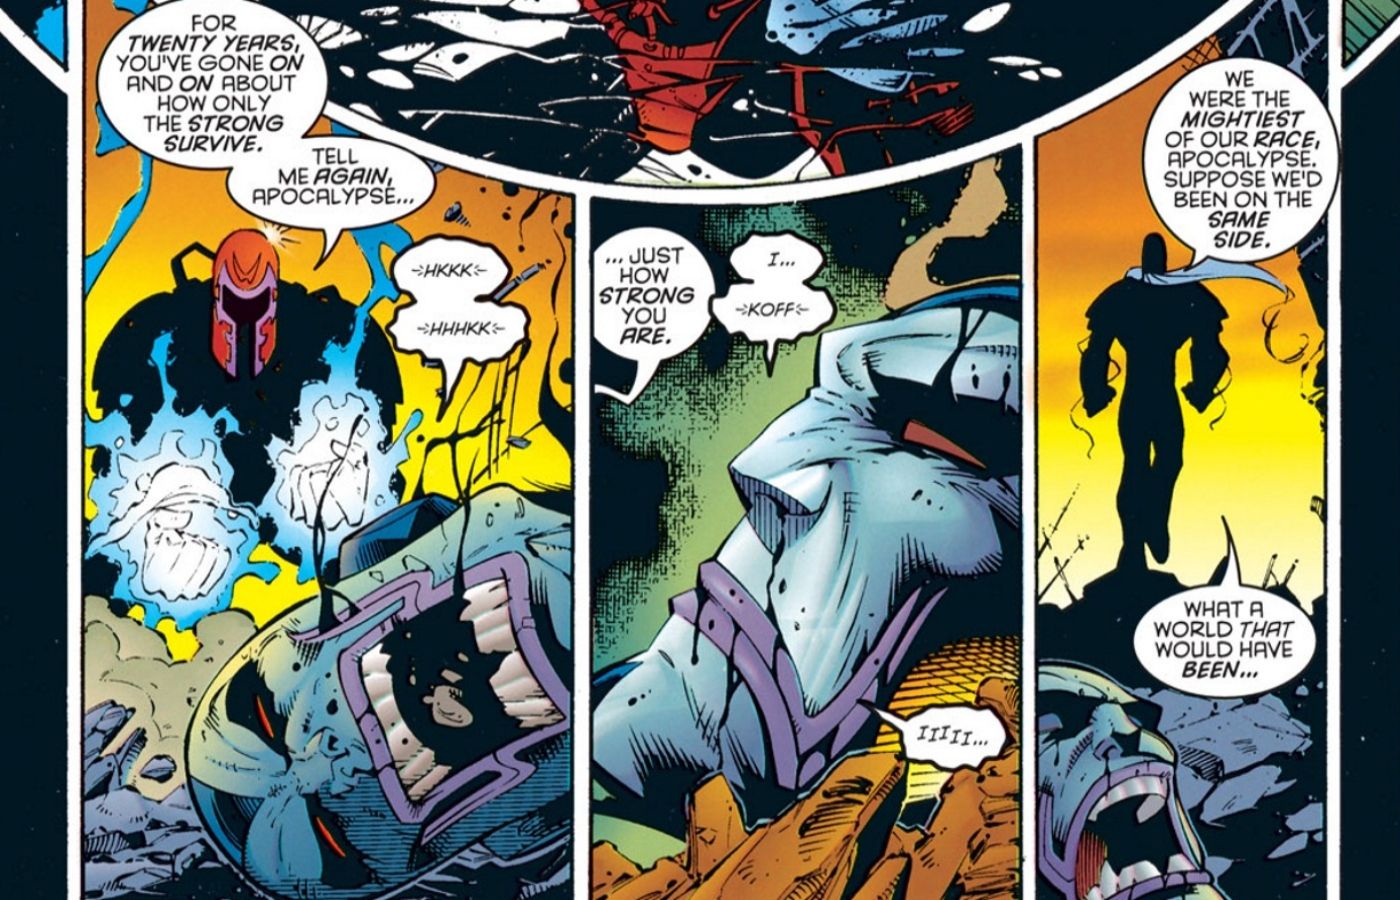 Magneto killing Apocalypse in the Age of Apocalypse.